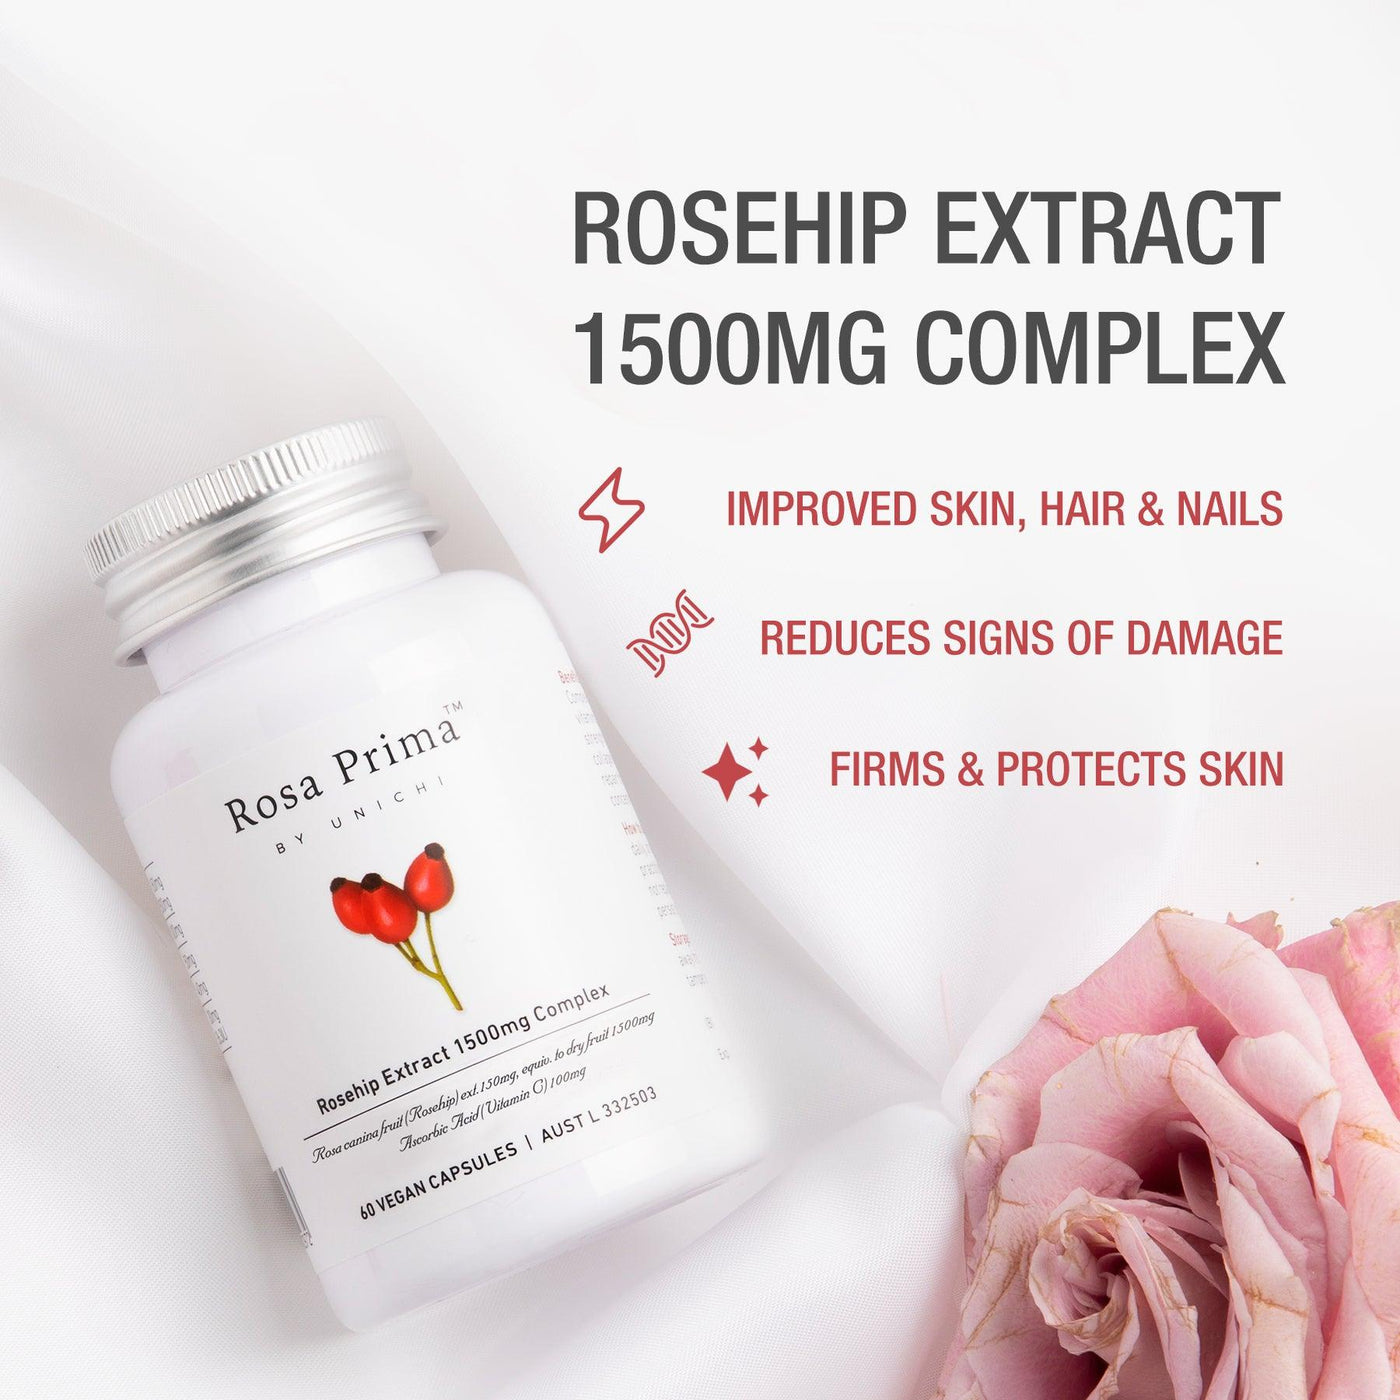 Unichi Rosa Prima Rosehip Extract 1500MG Complex - Unichi Wellness